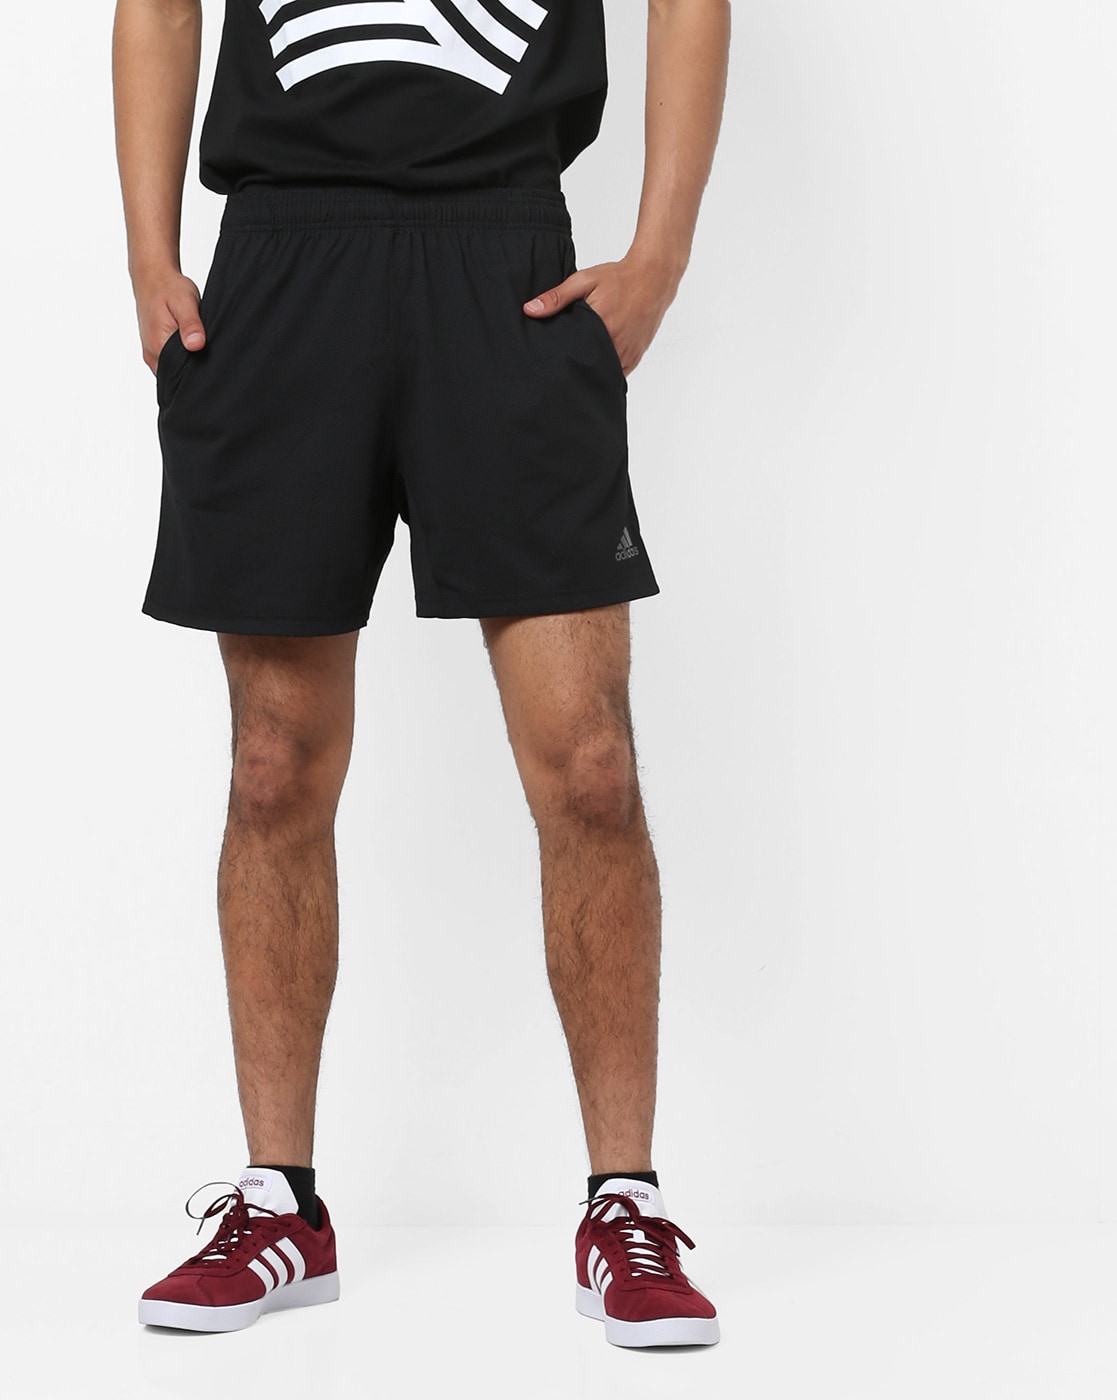 adidas shorts with zipper pockets